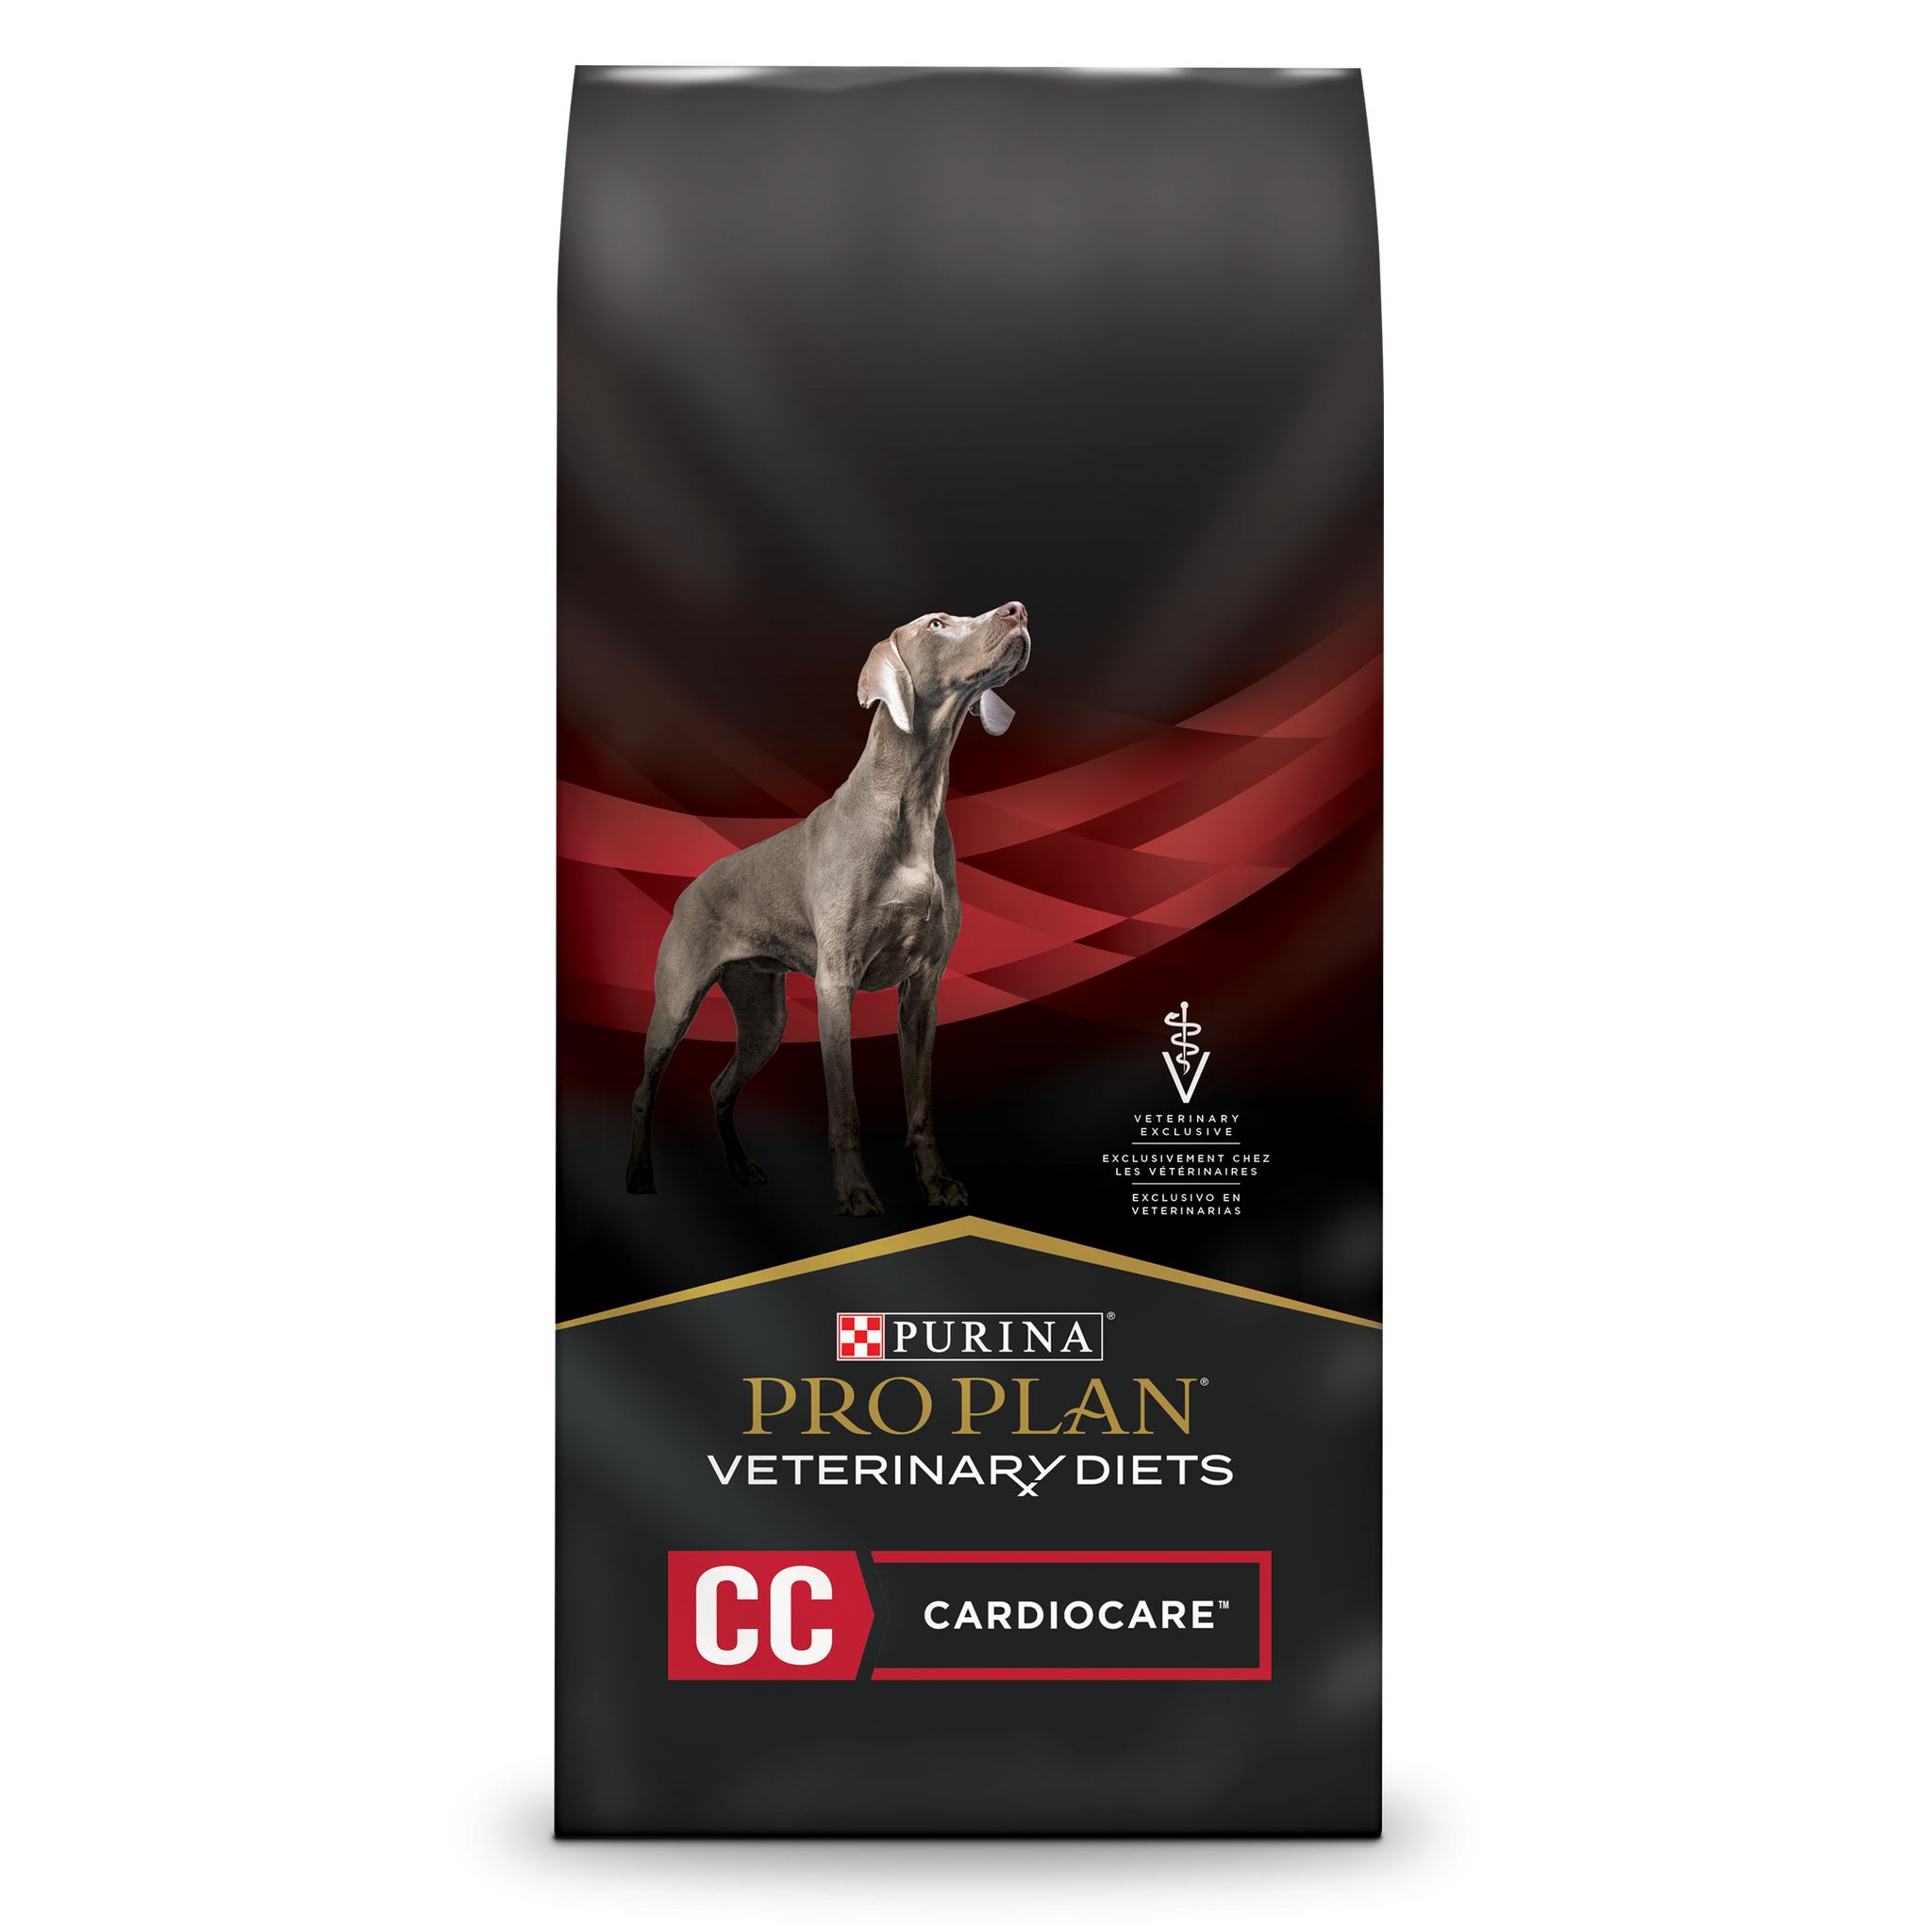 Purina Pro Plan Veterinary Diet CC Cardiocare Dry Dog Food